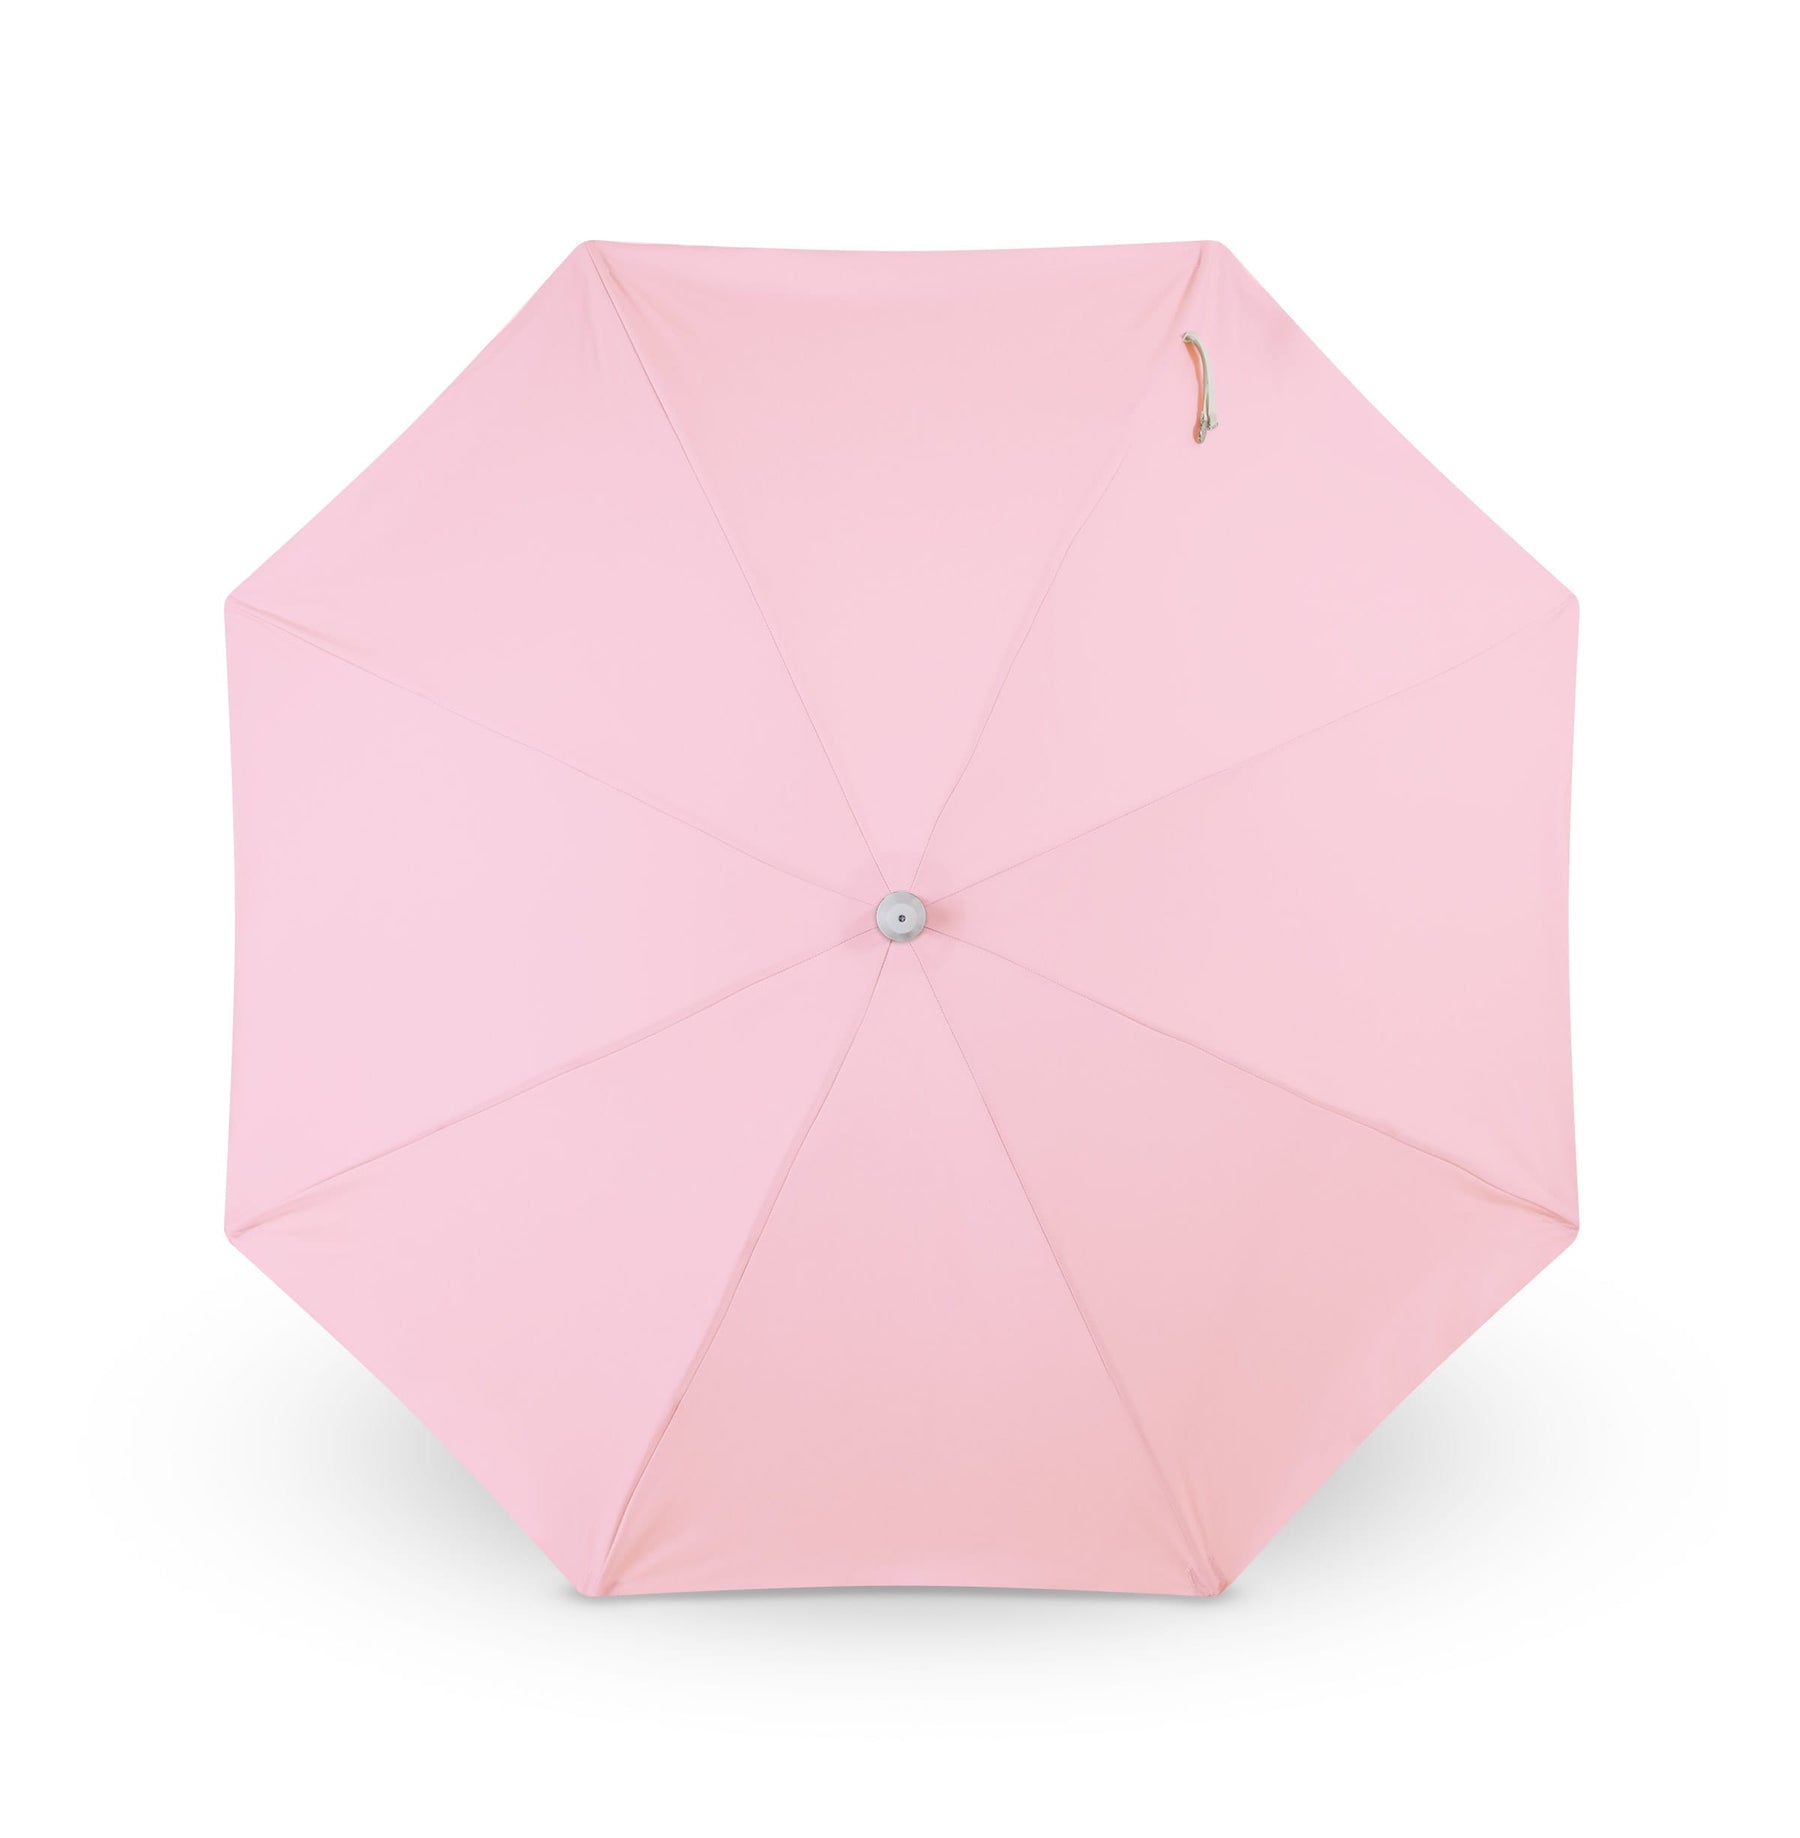 Ariel beach Umbrella & Travel Umbrella | Supply Co.